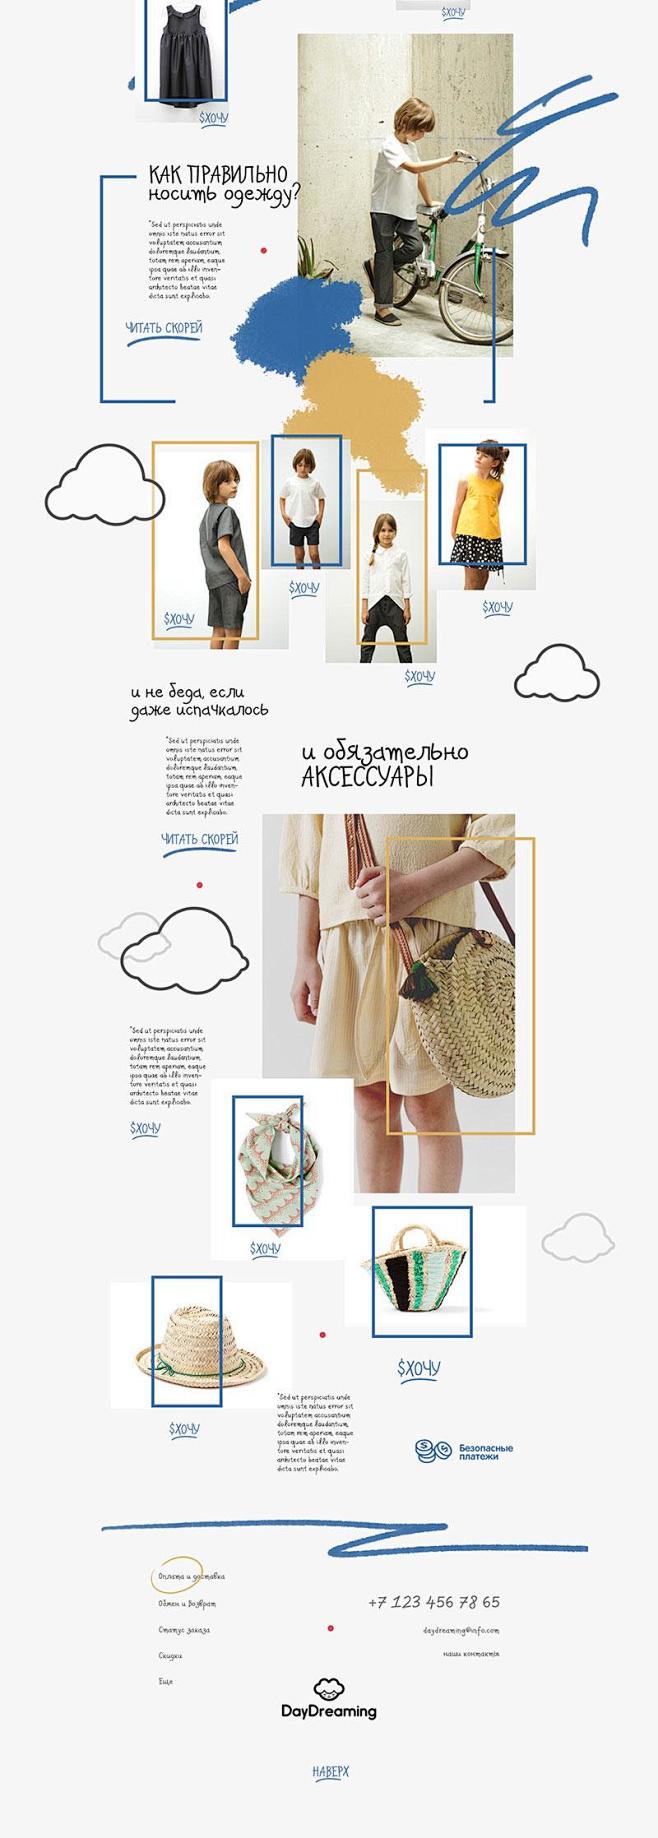 Pocket: 活泼的童装网页设计欣赏